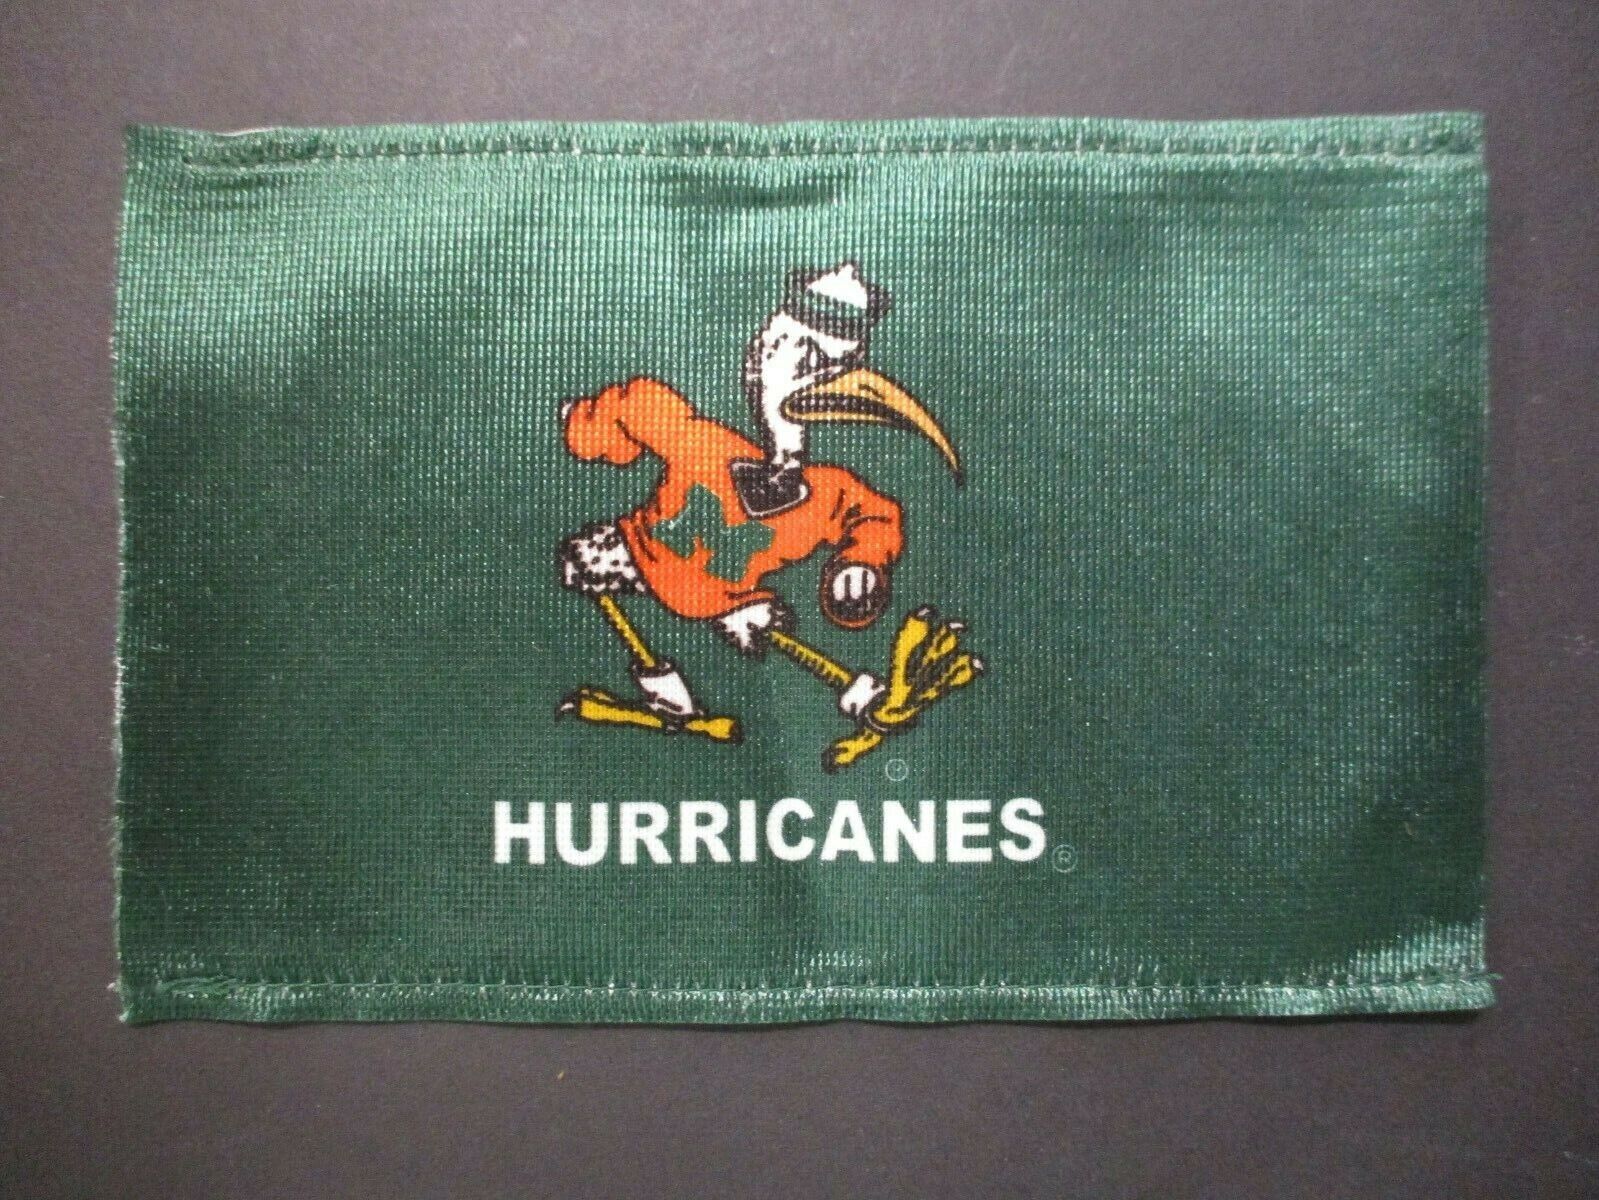 Miami Hurricanes Mini Flag Size 3.75 x 5.75 inches NO Pole or String for Flag